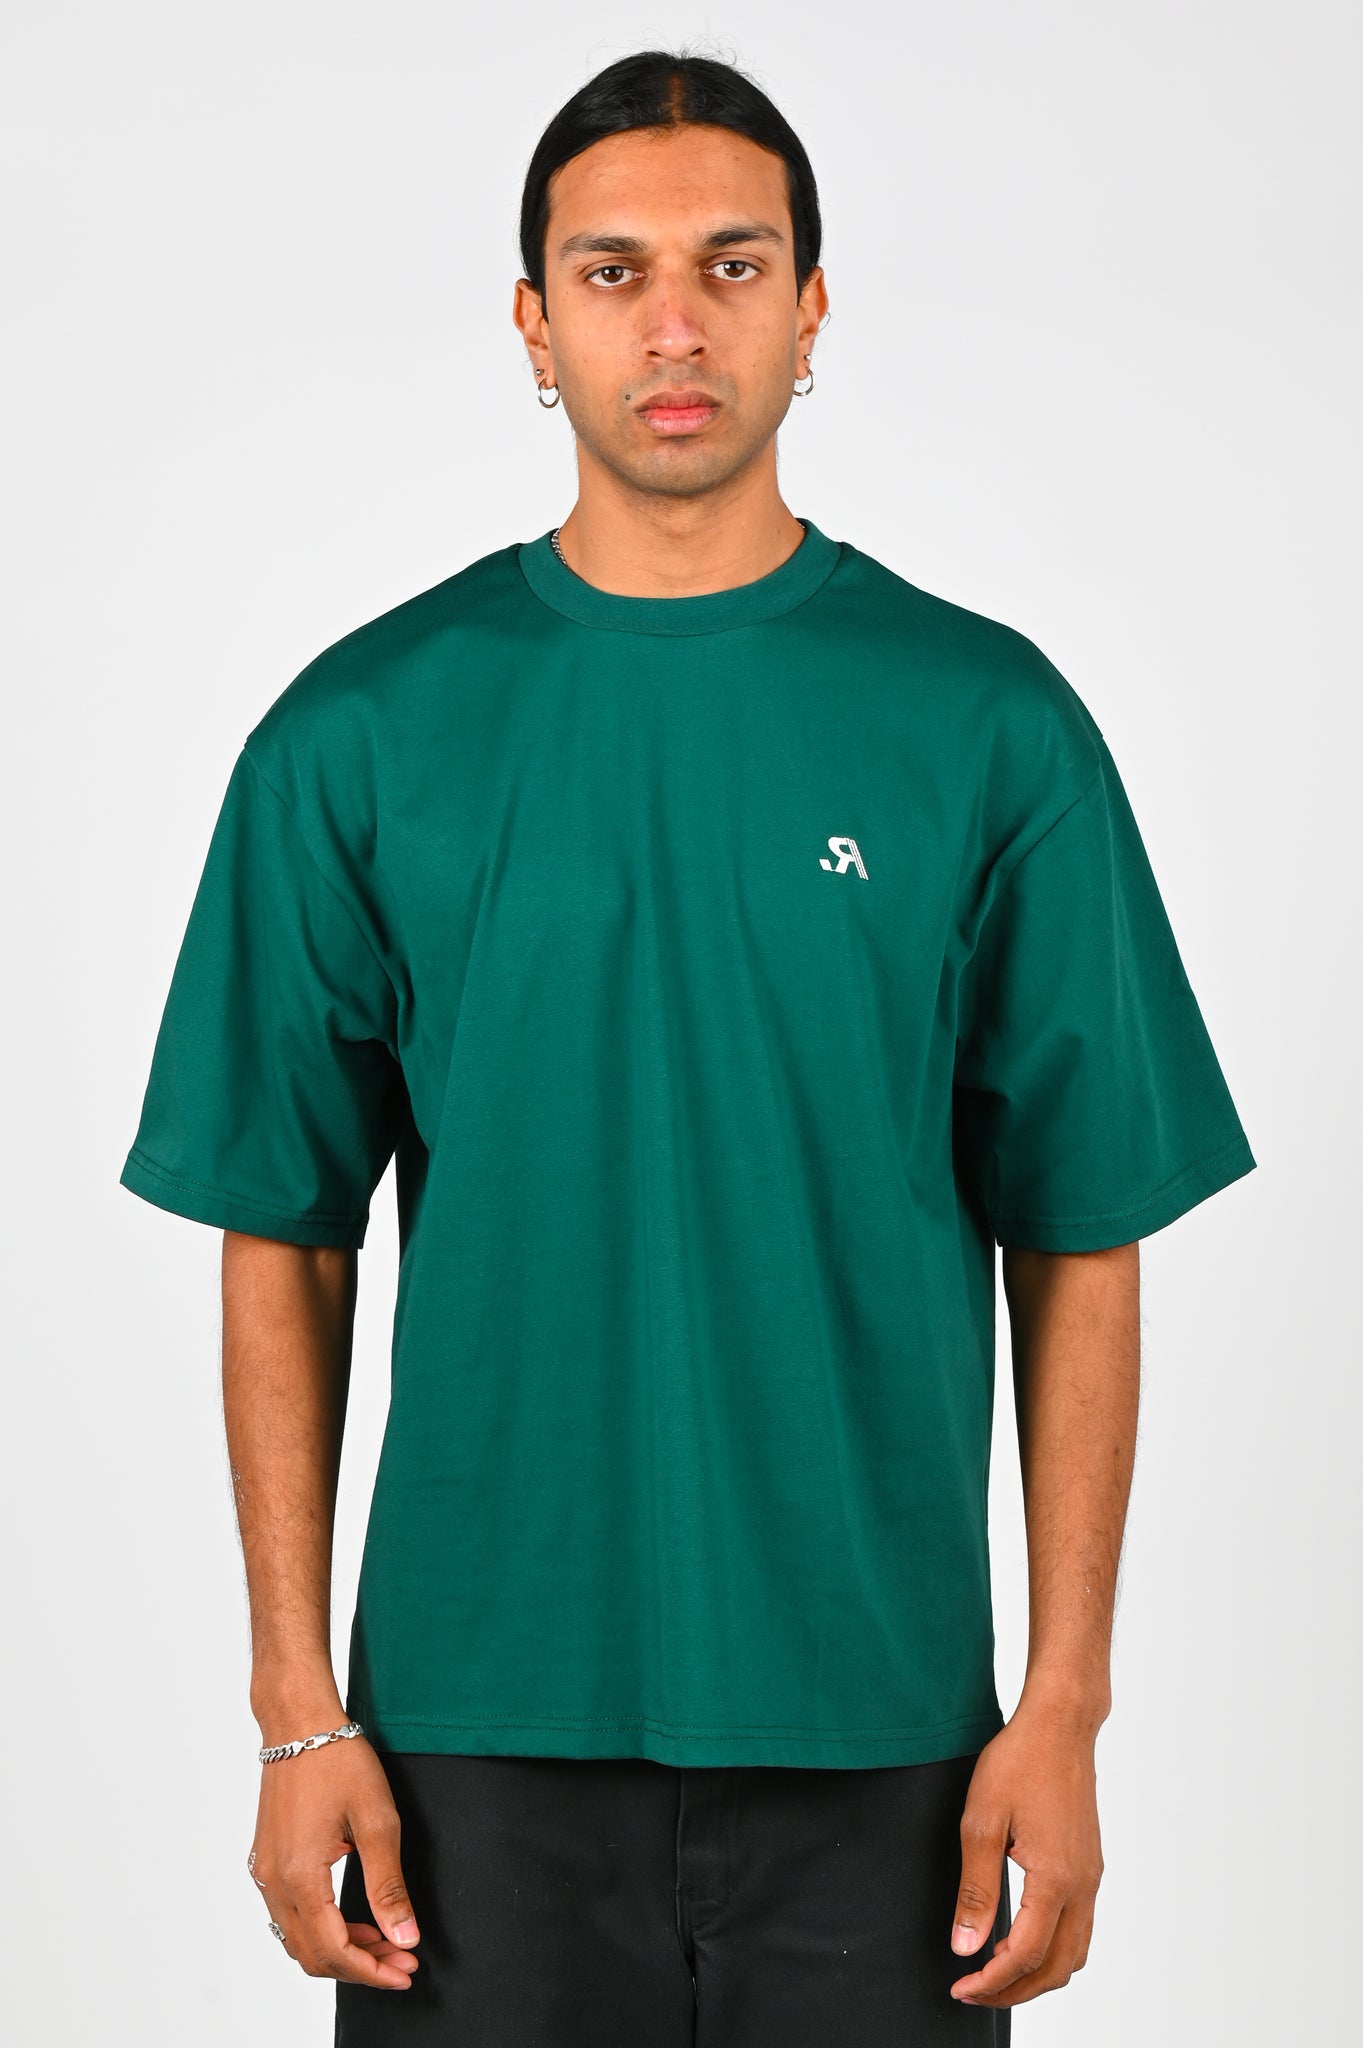 R.Sport 'Classic' Logo Tee in Emerald Green